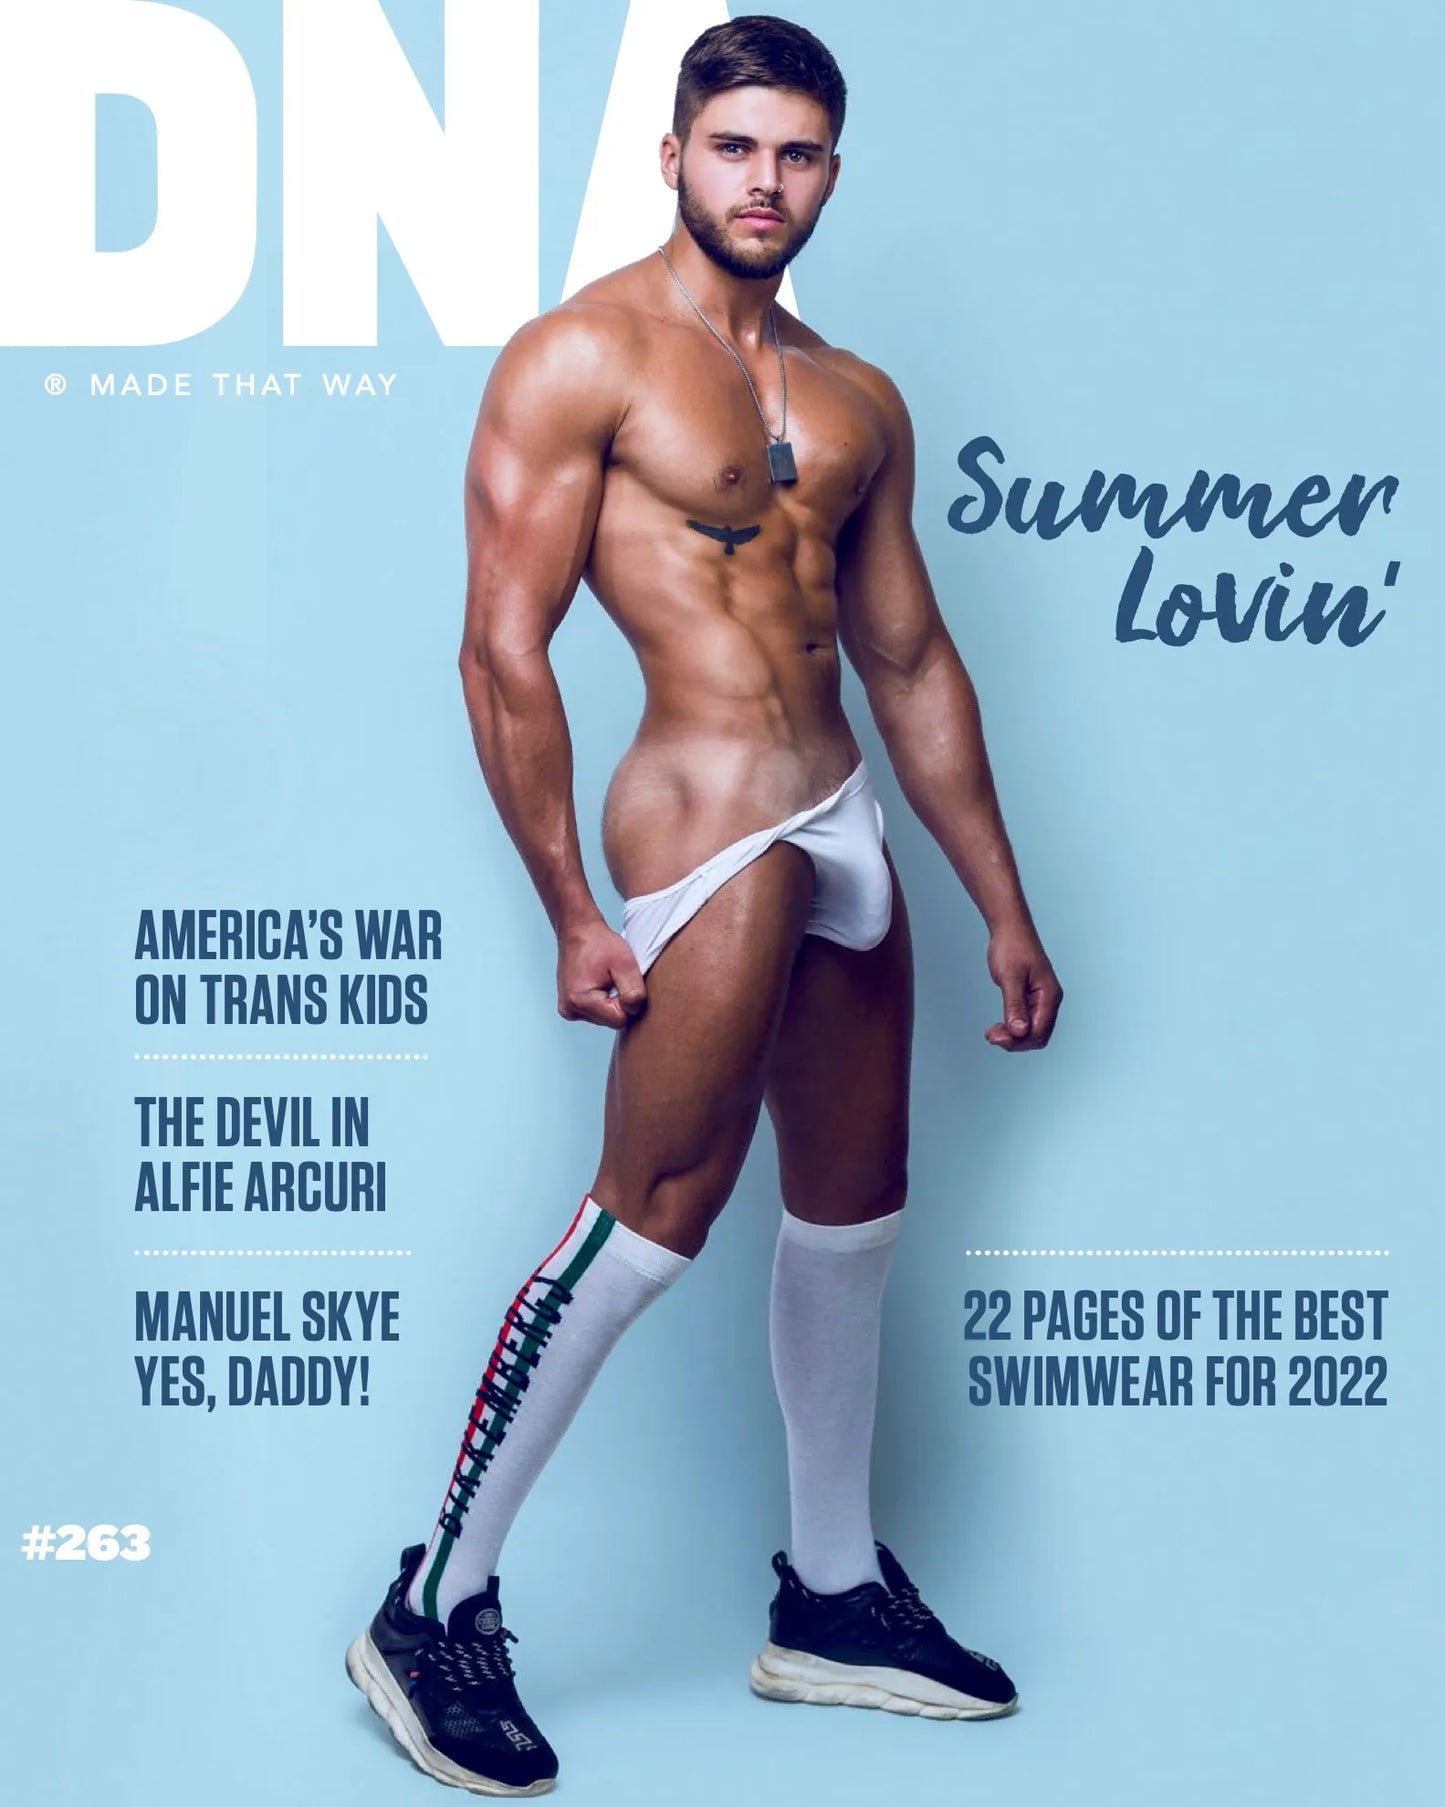 DNA Magazine